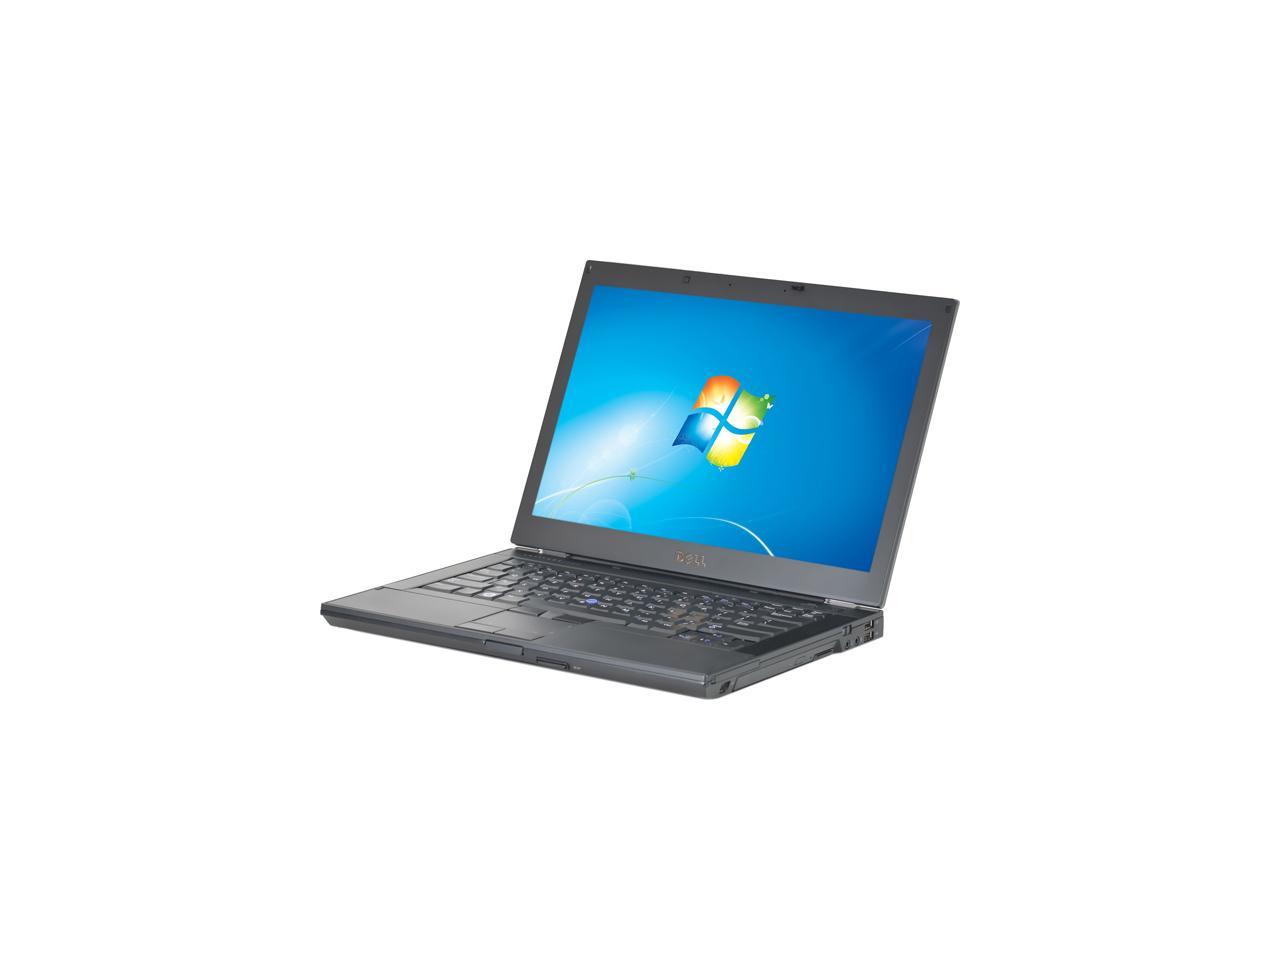 Refurbished: DELL Laptop E6410 Intel Core i5 1st Gen 520M (2.40 GHz) 4